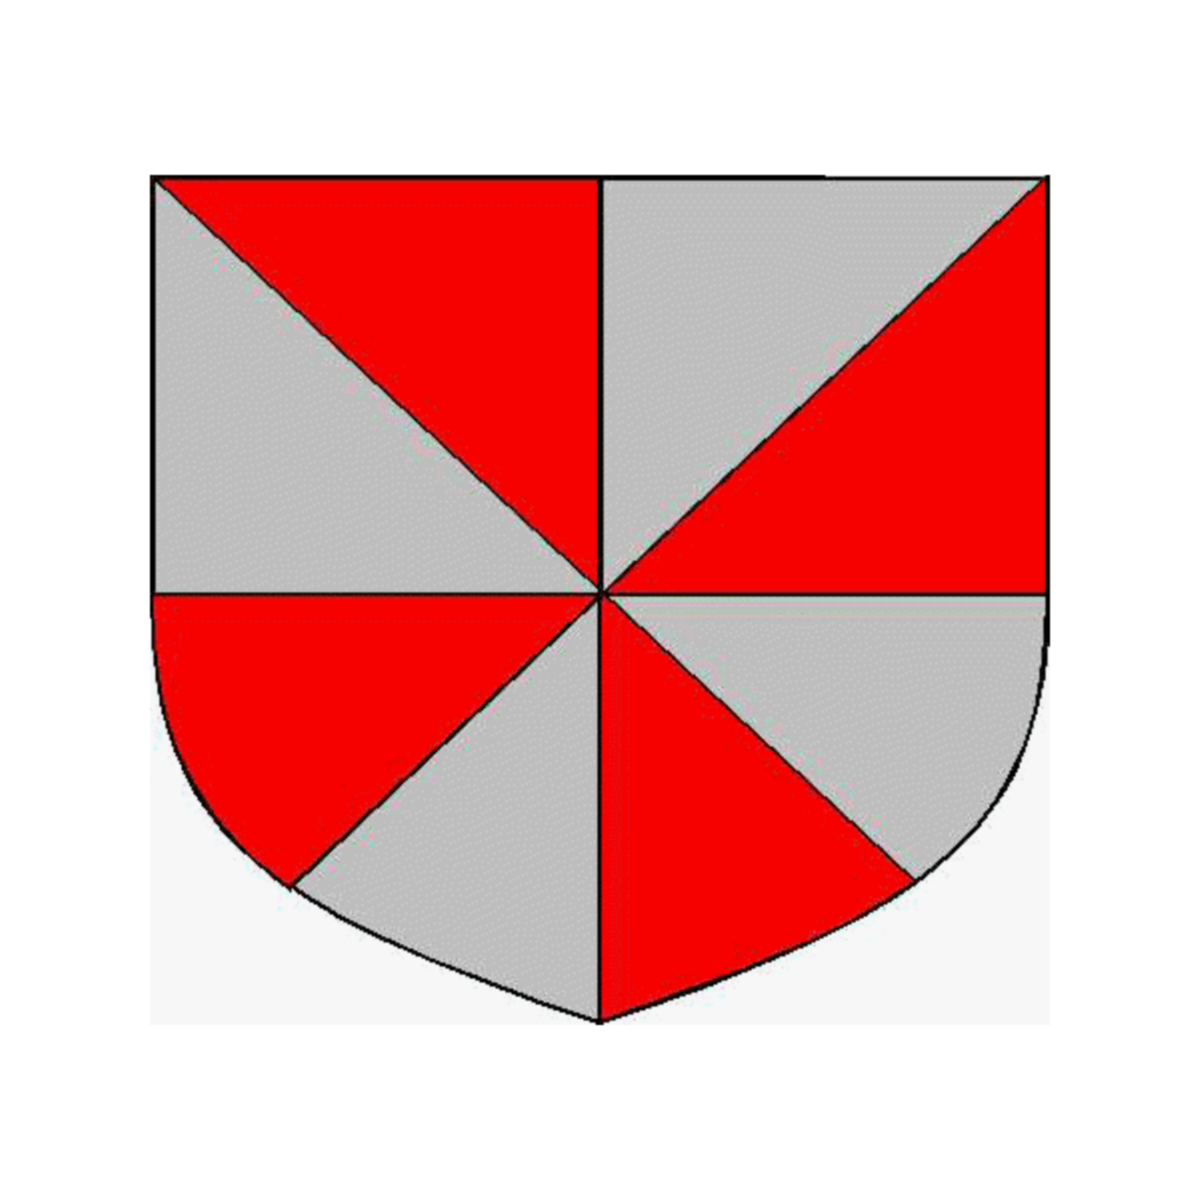 Wappen der Familie Amoros